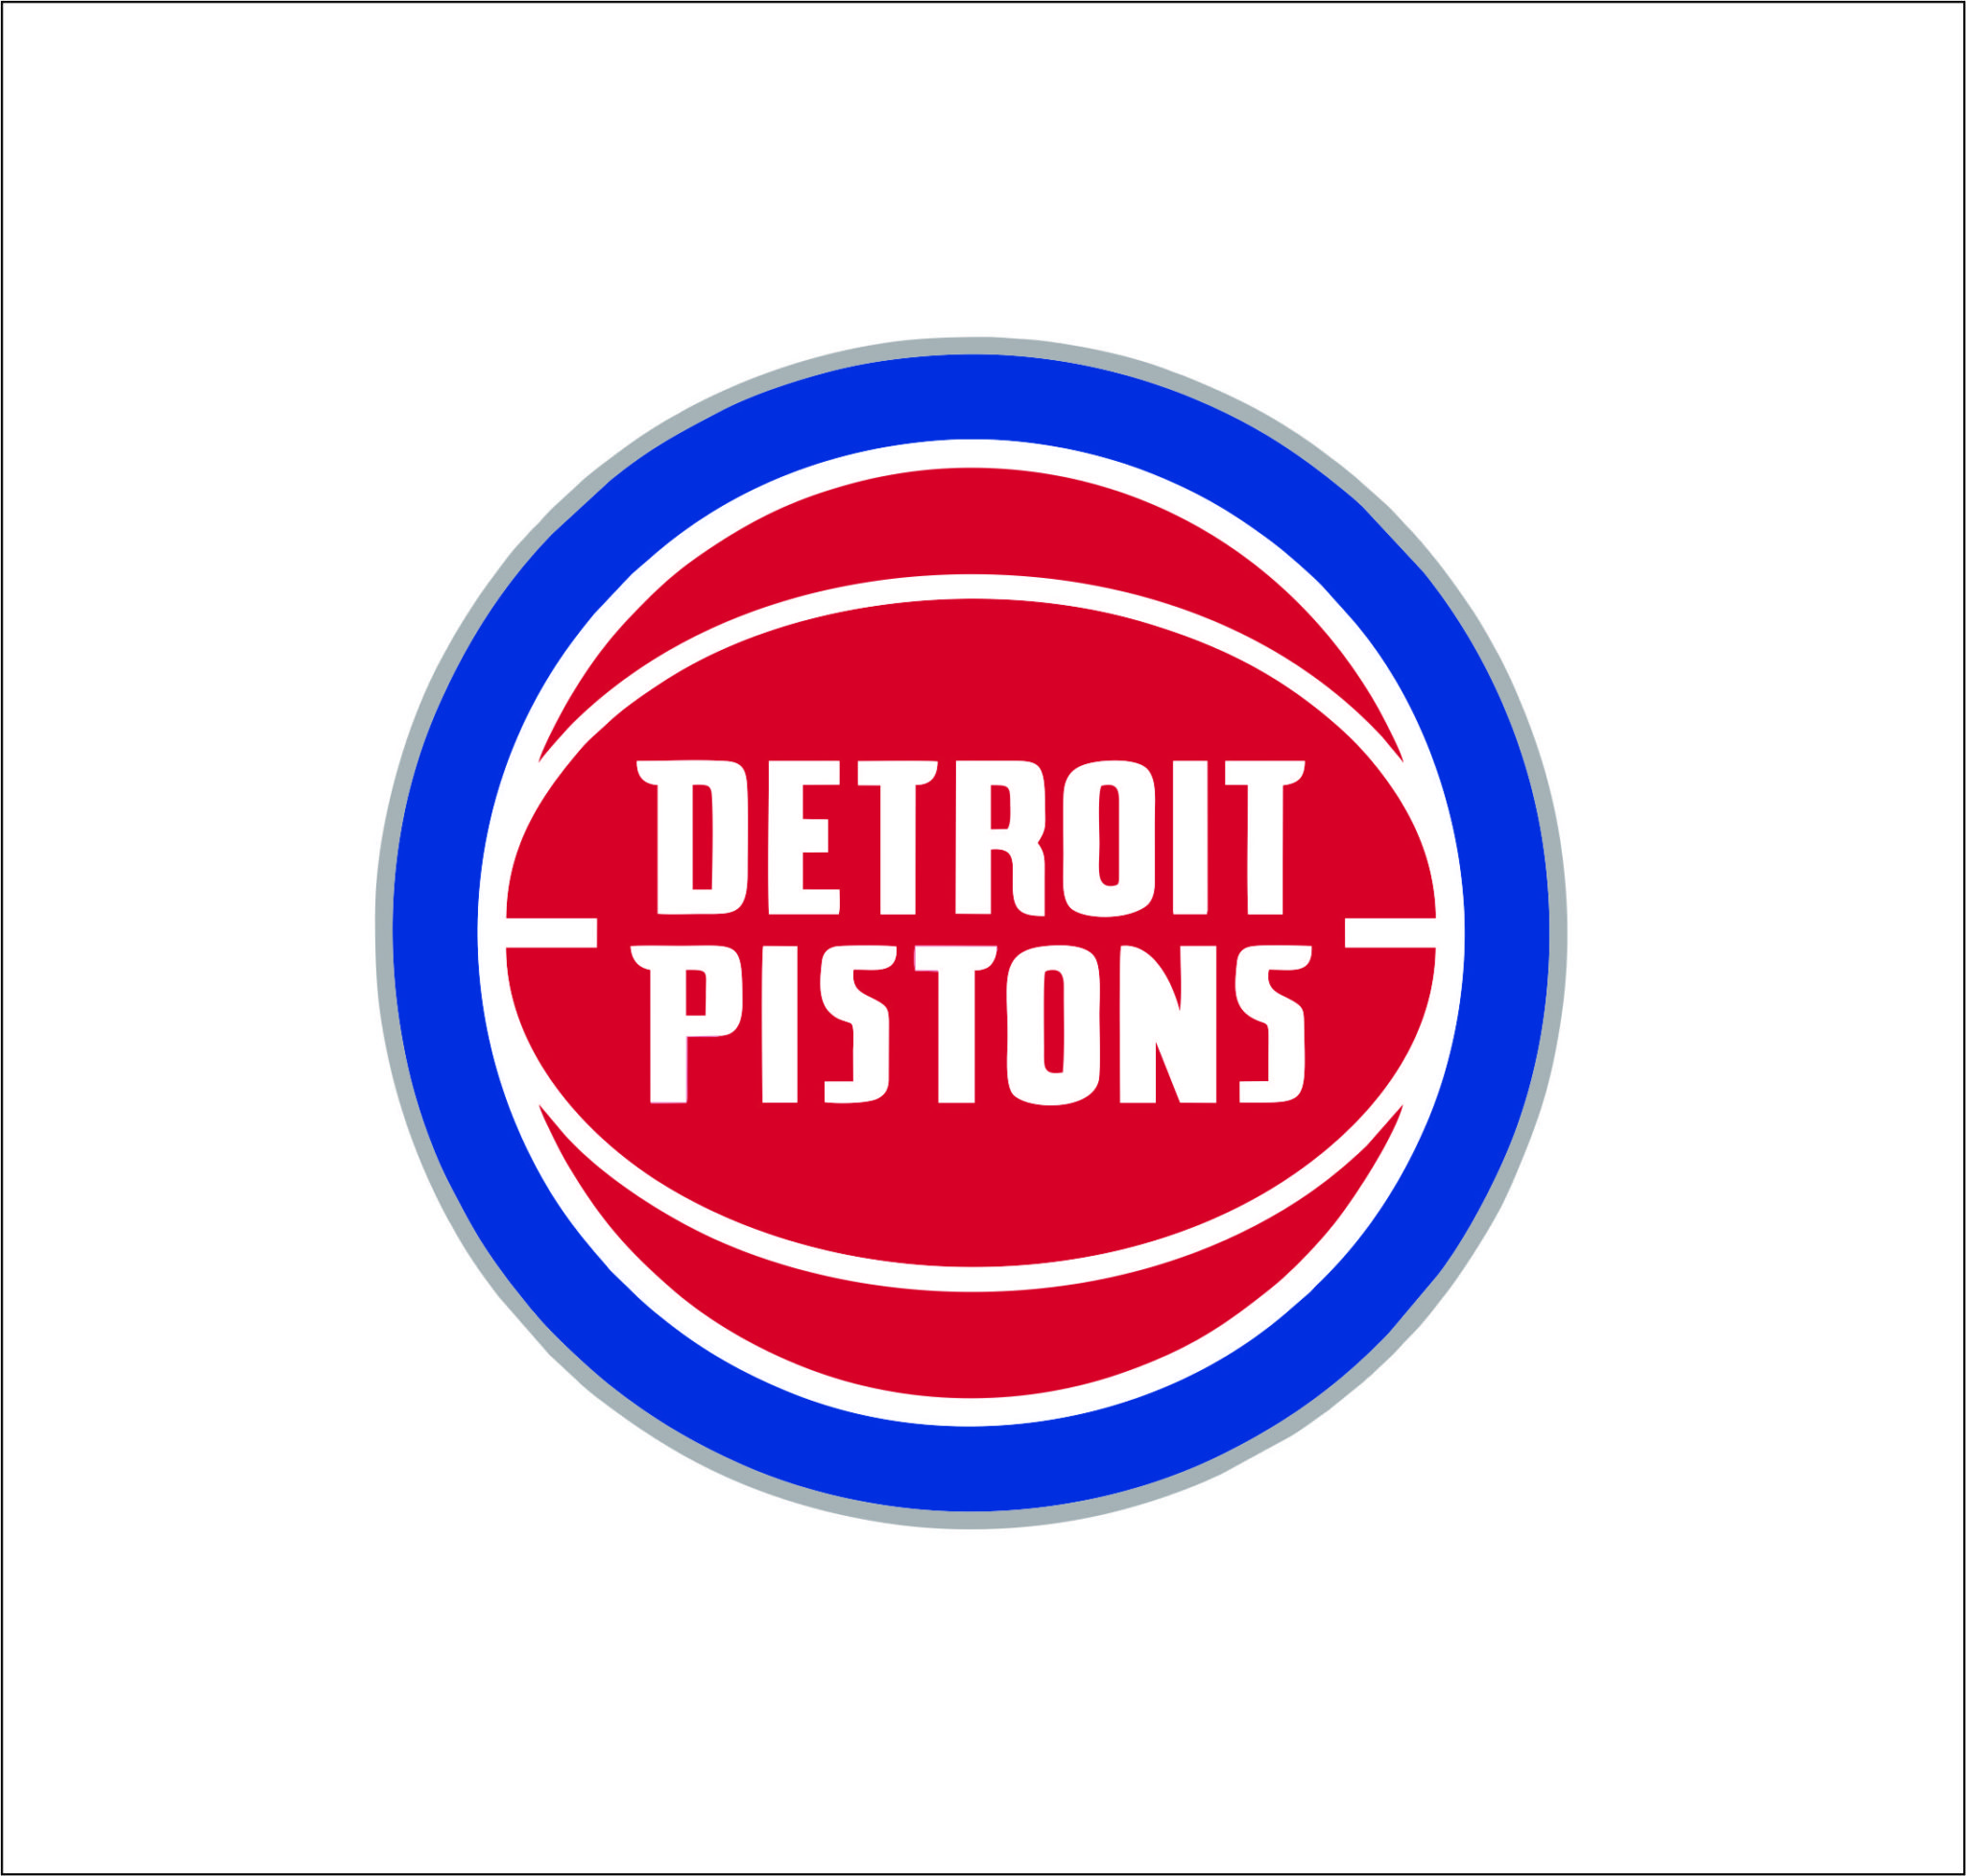 Detroit pistons. Детройт Пистонс. Пистонс лого. Detroit Pistons logo. Detroit Pistons Arena.